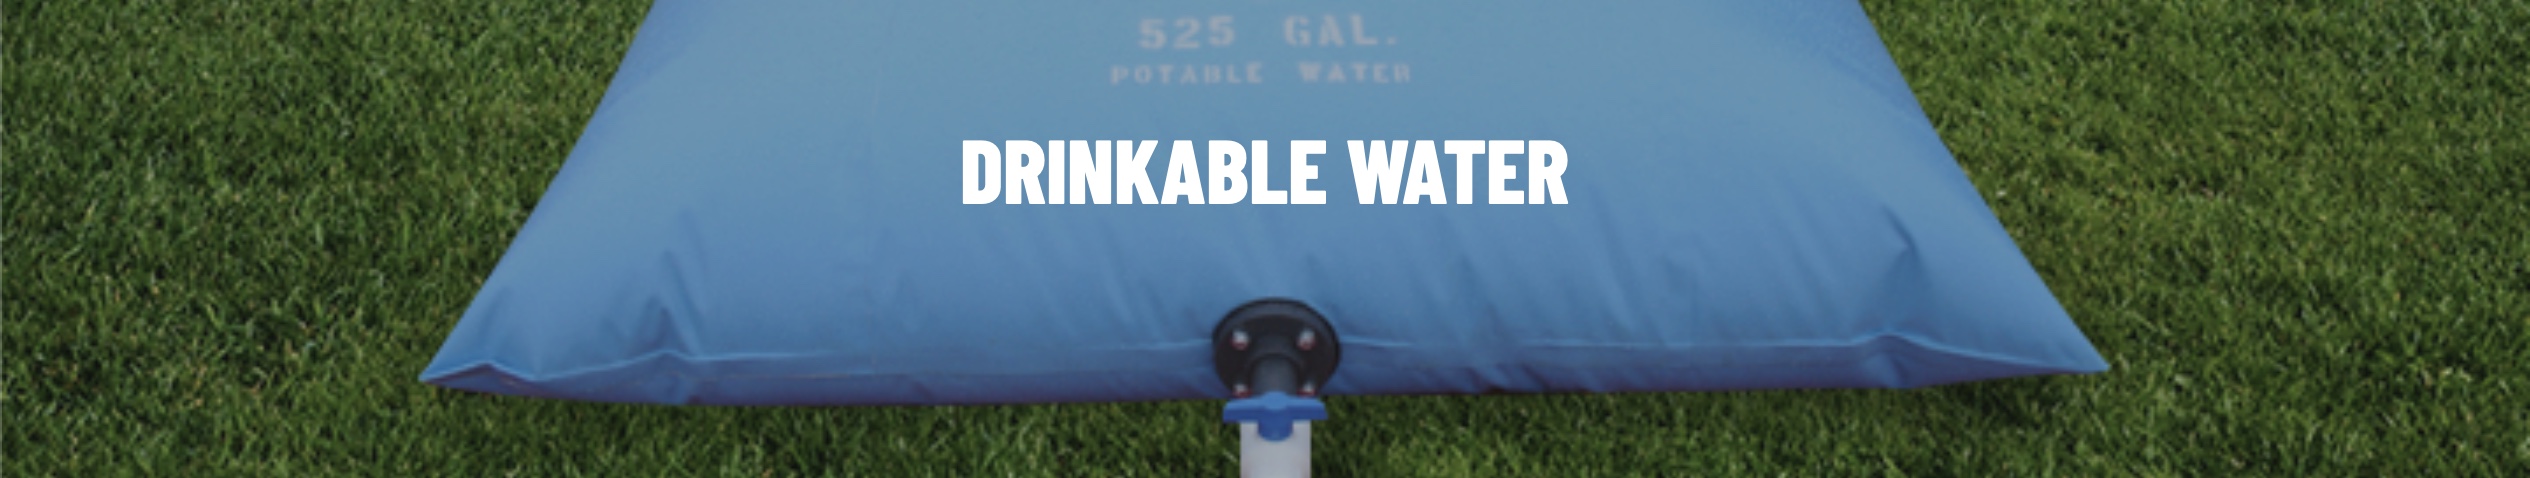 drinkable-water-pillow.jpg